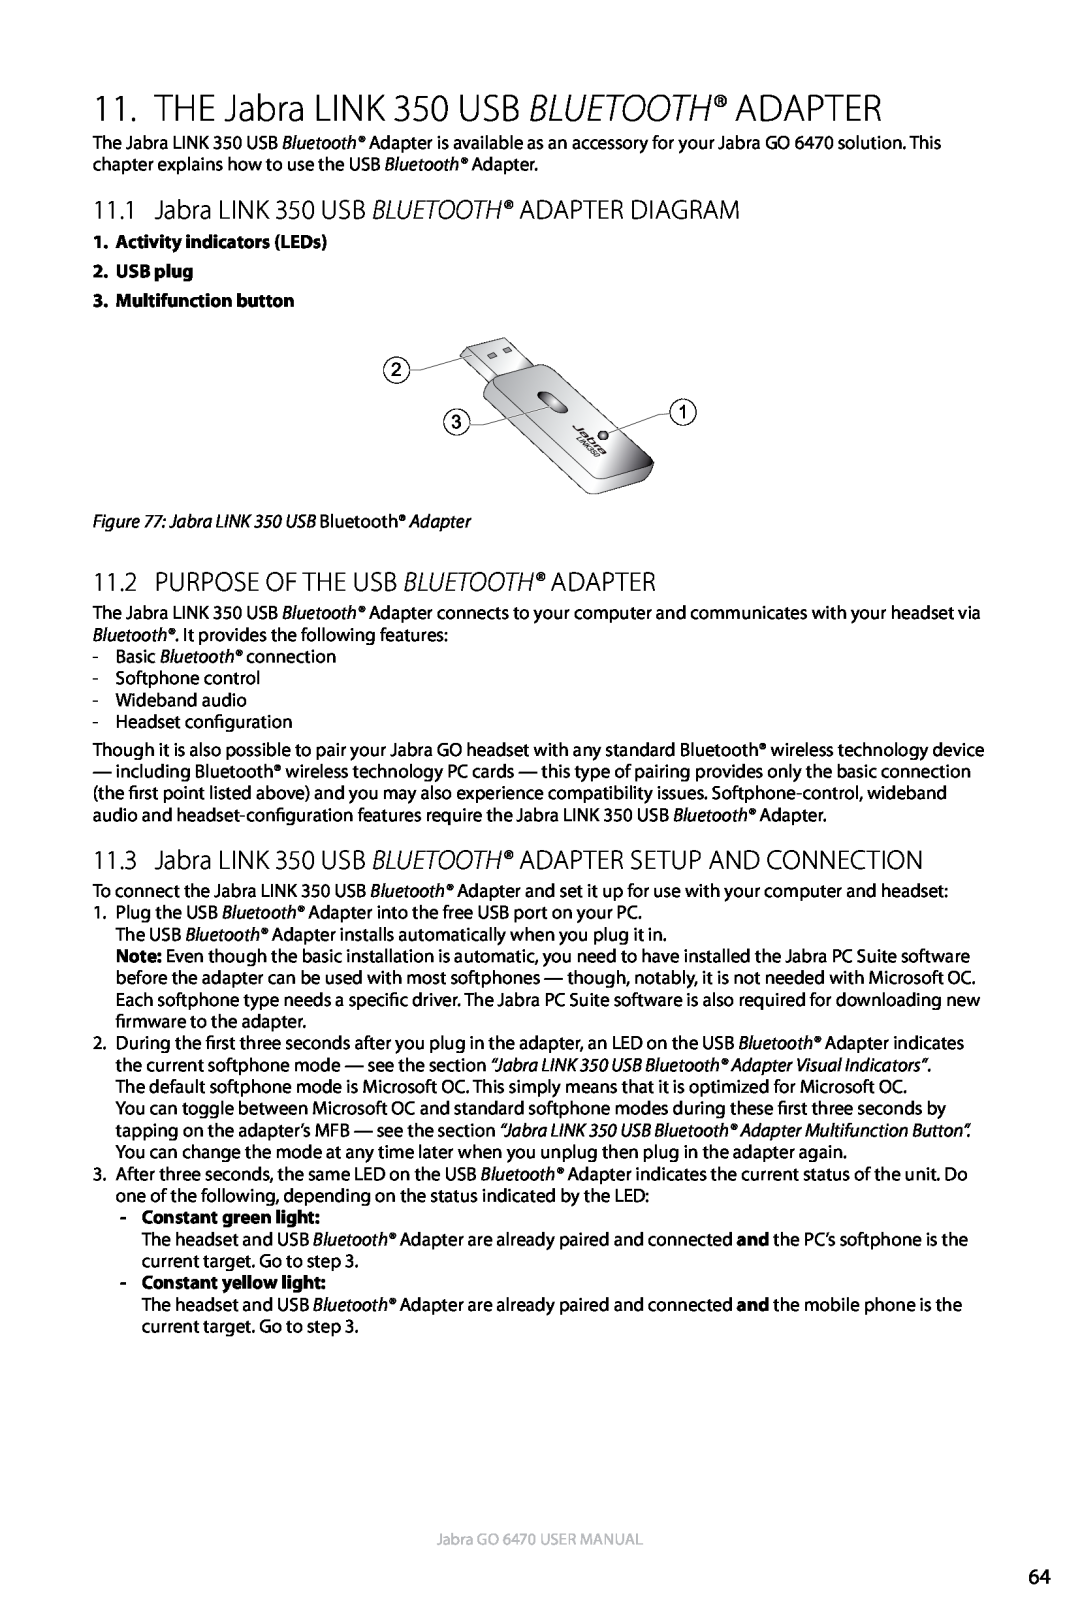 Jabra GO 6470 user manual The Jabra LINK 350 USB Bluetooth Adapter, 11.1Jabra LINK 350 USB Bluetooth Adapter Diagram 